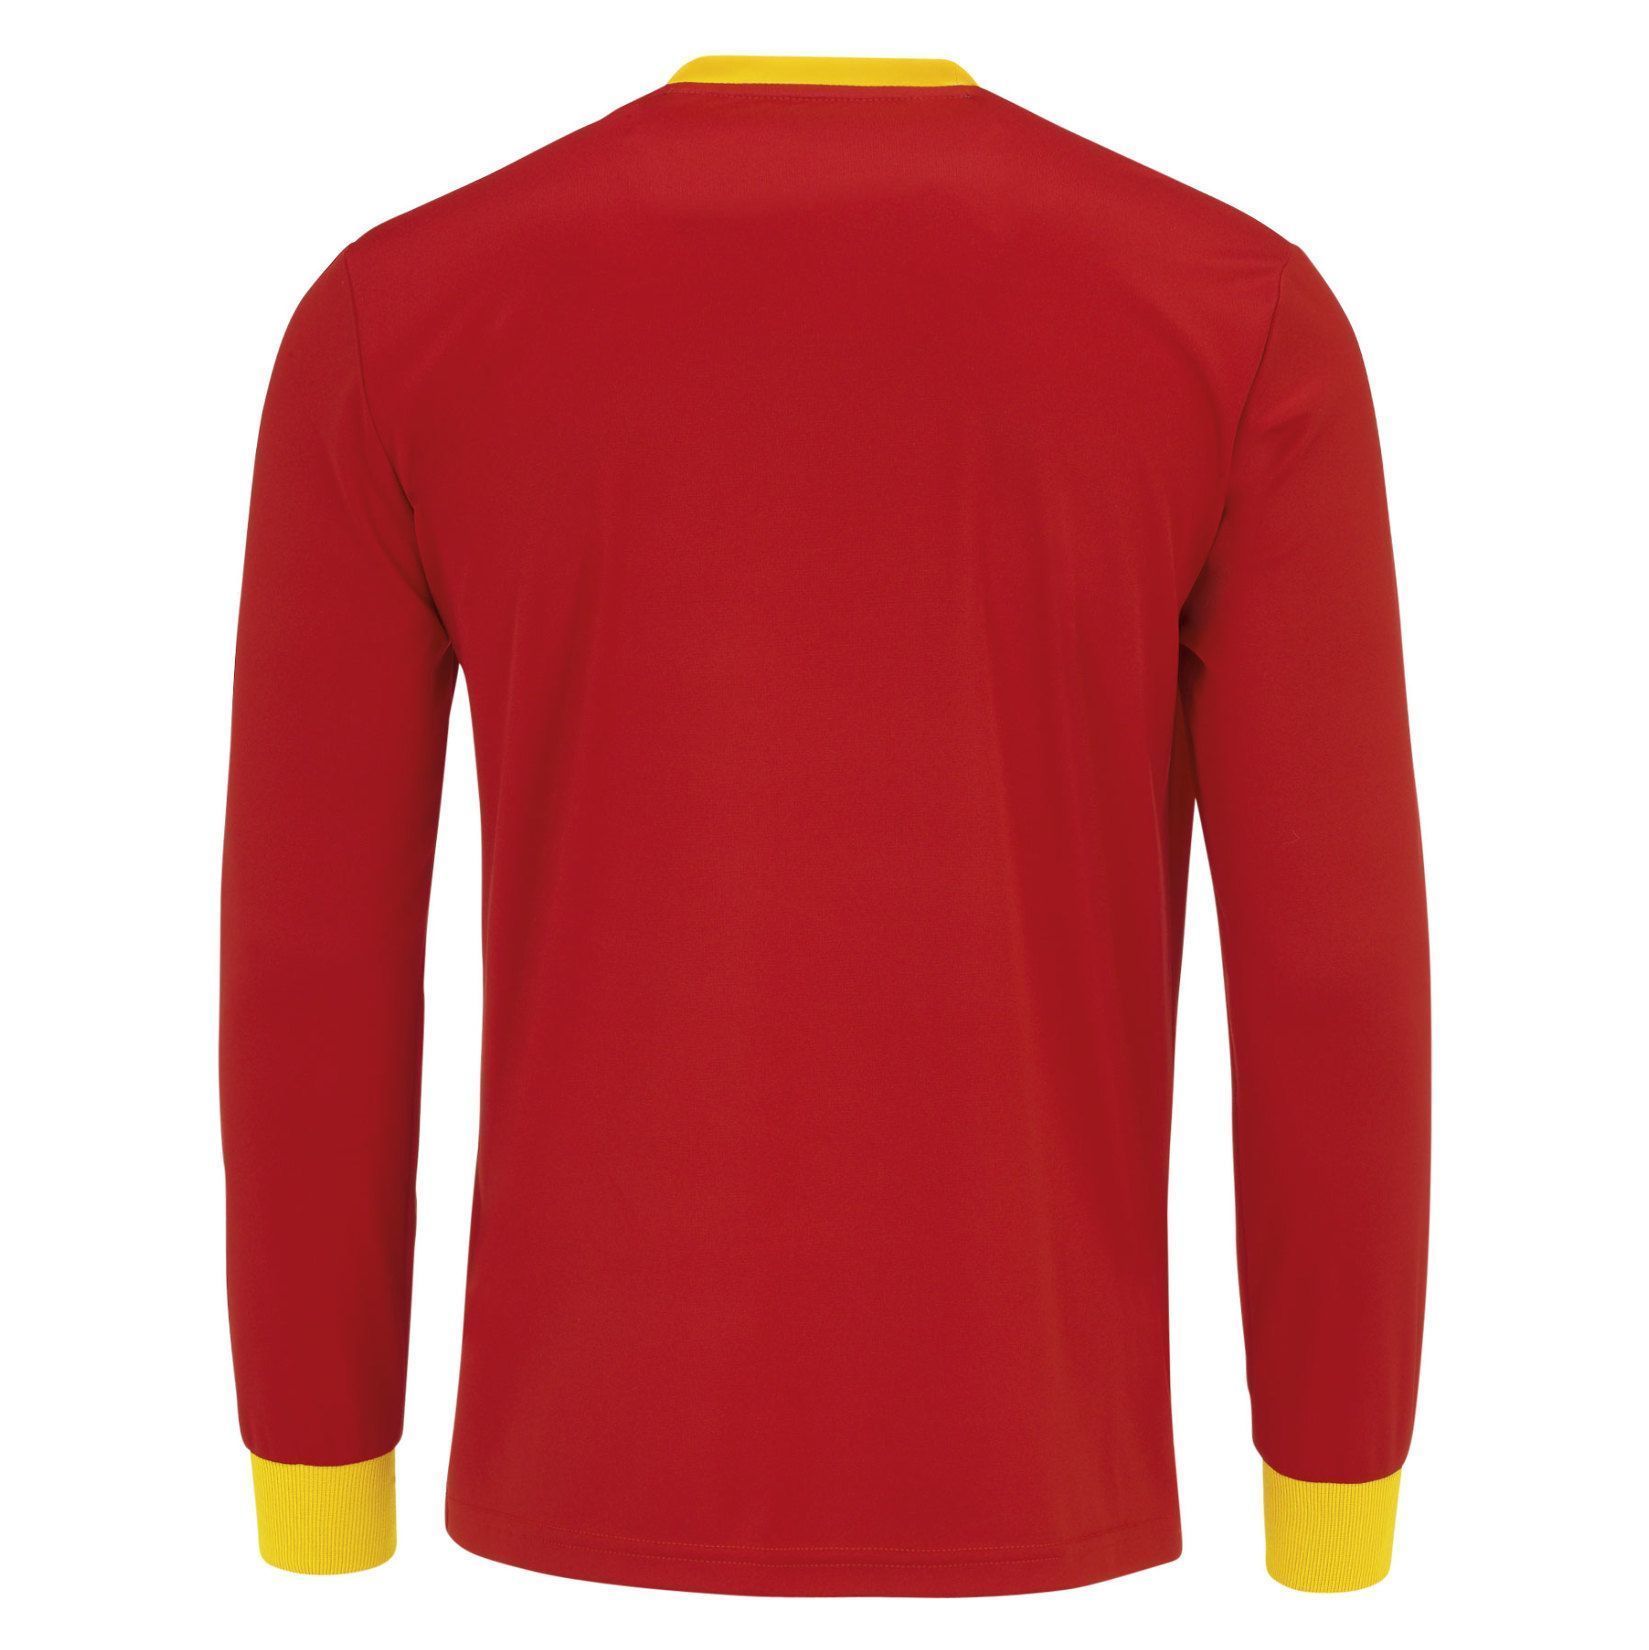 Errea Jaro Long Sleeve Football Shirt - Kitlocker.com